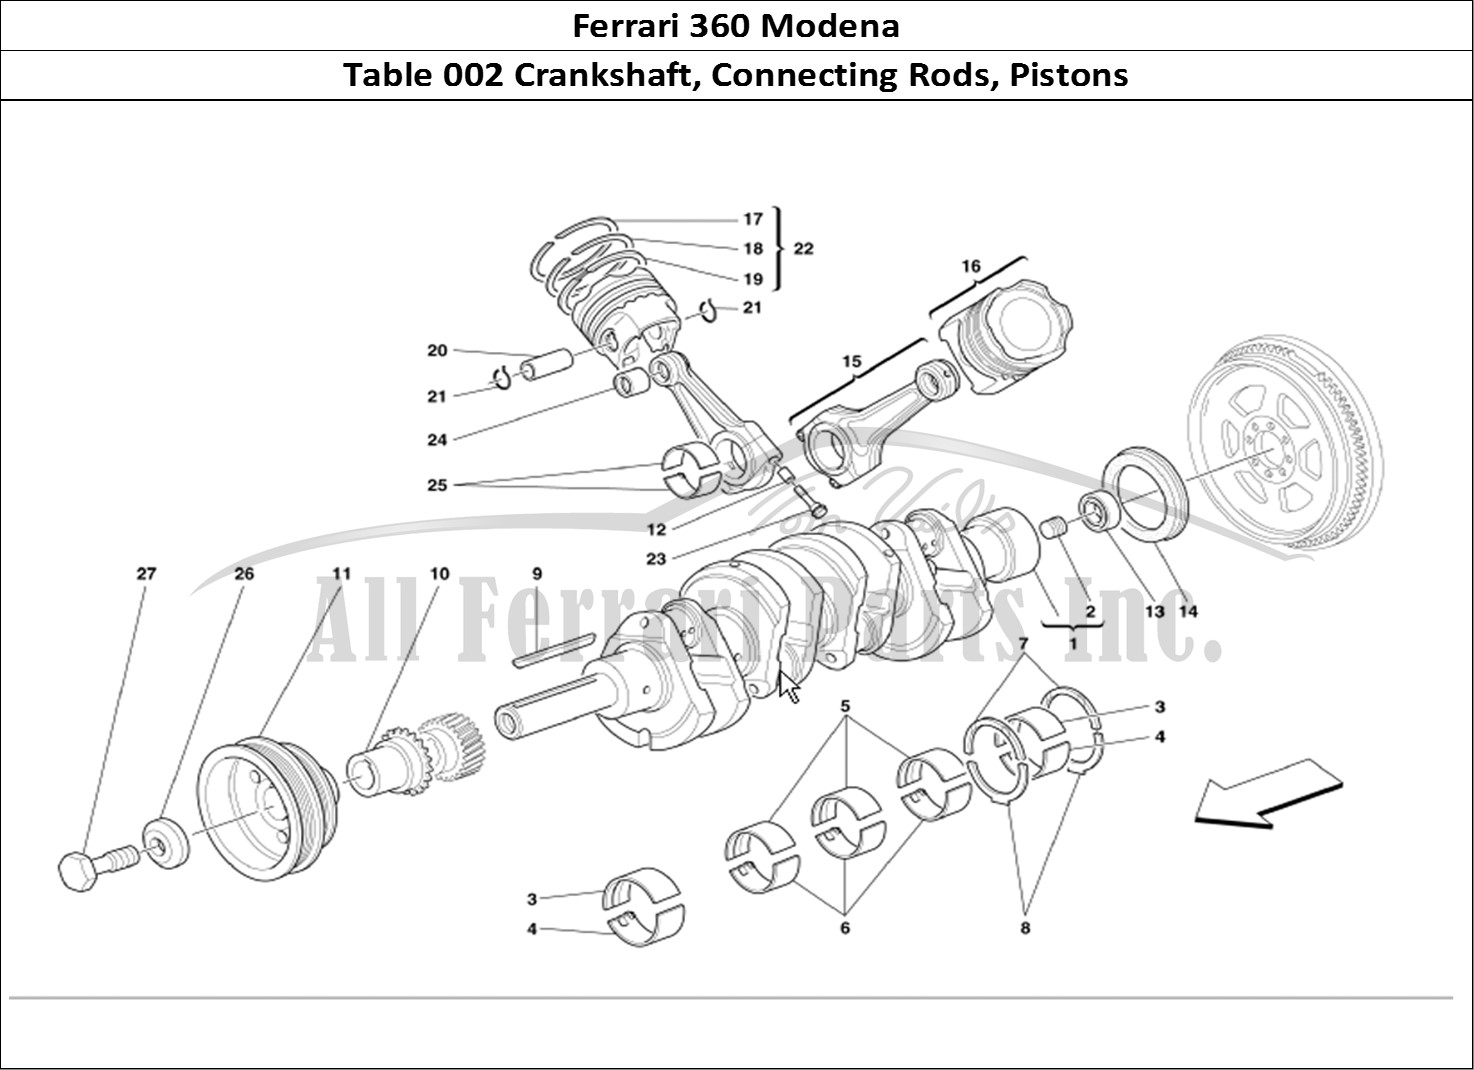 Ferrari Parts Ferrari 360 Modena Page 002 Crankshaft, Conrods And P